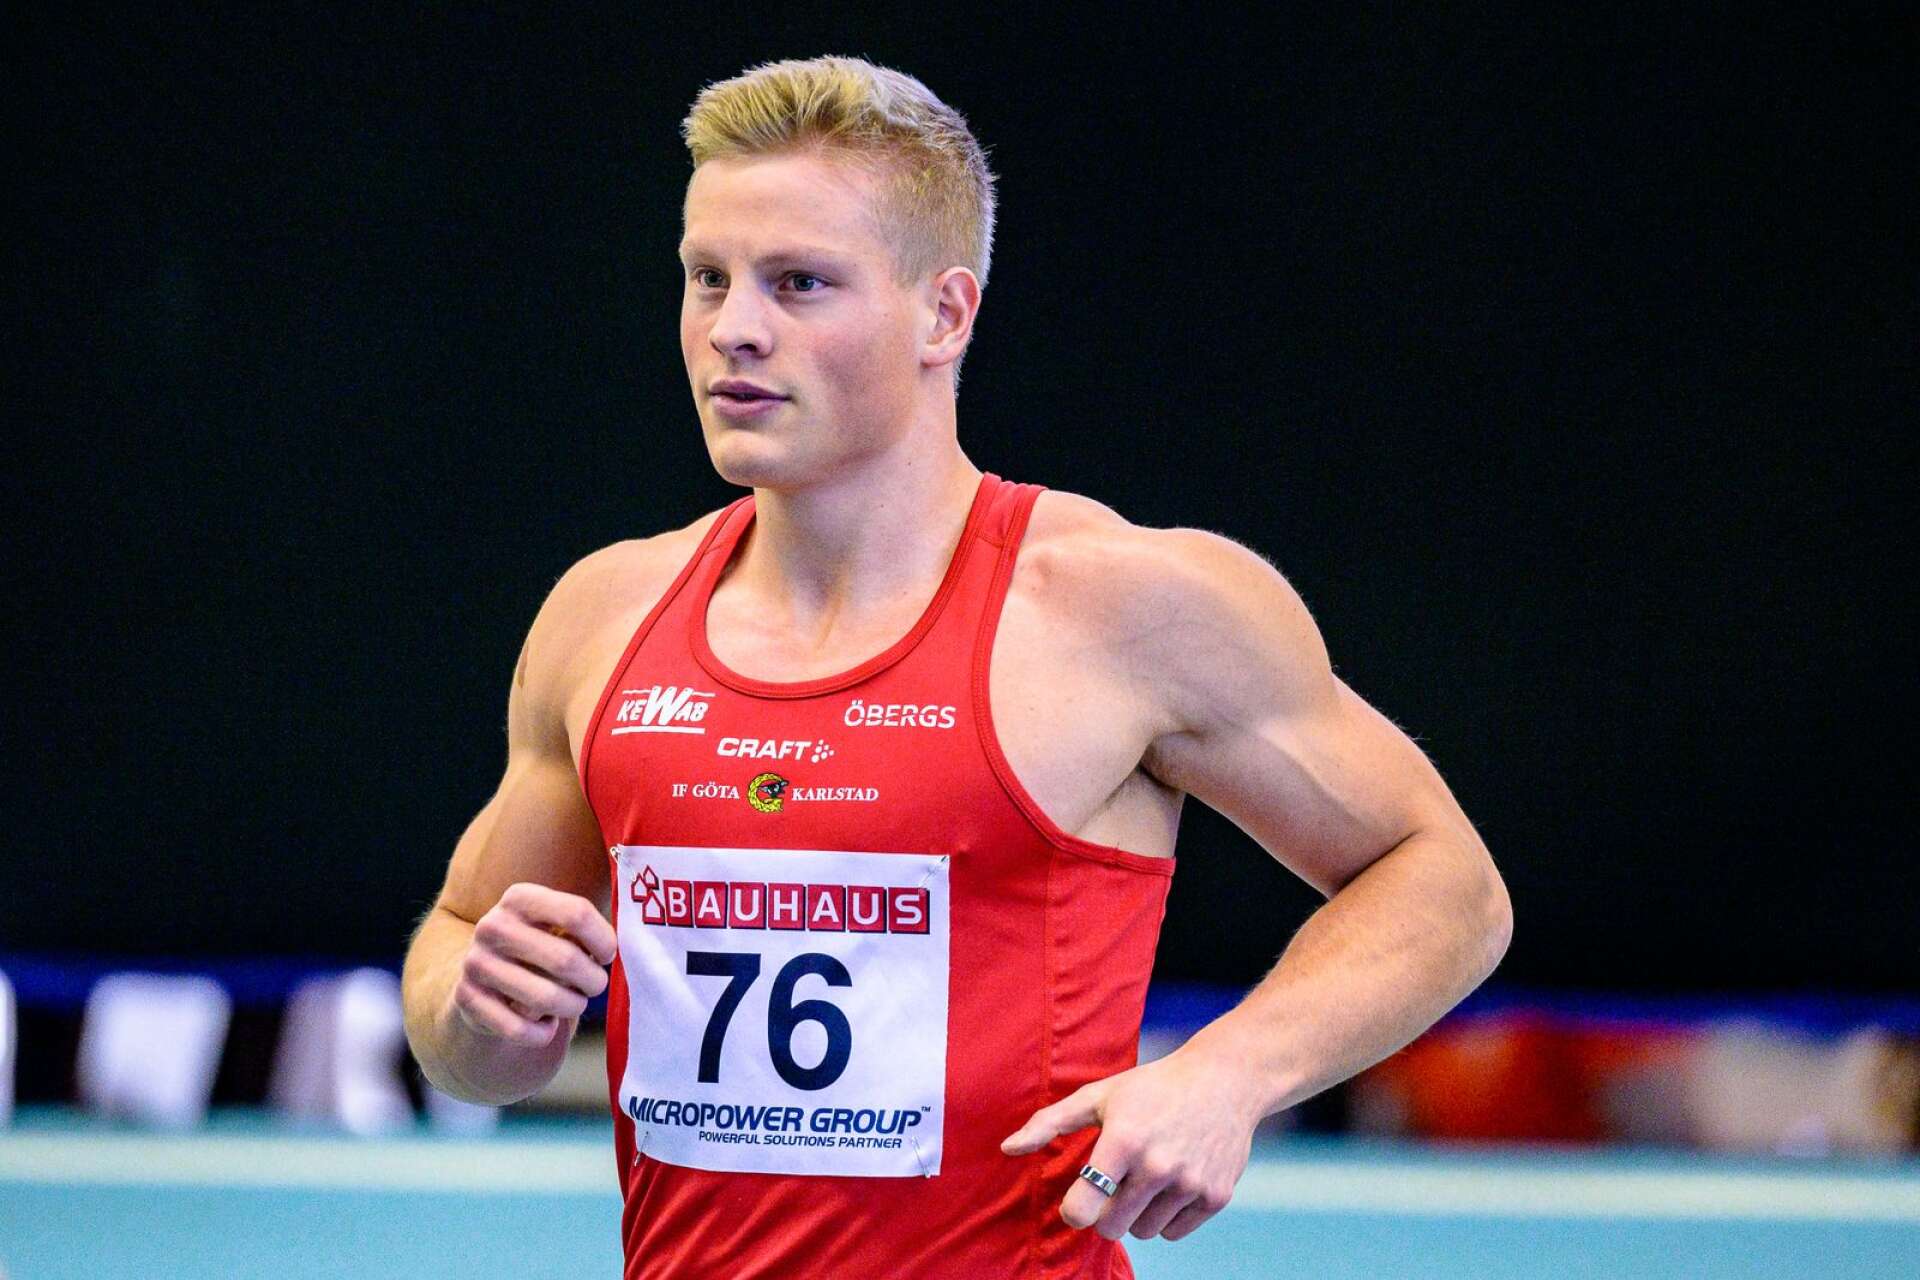 Den nye svenske rekordhållaren på 60 meter heter Henrik Larsson.